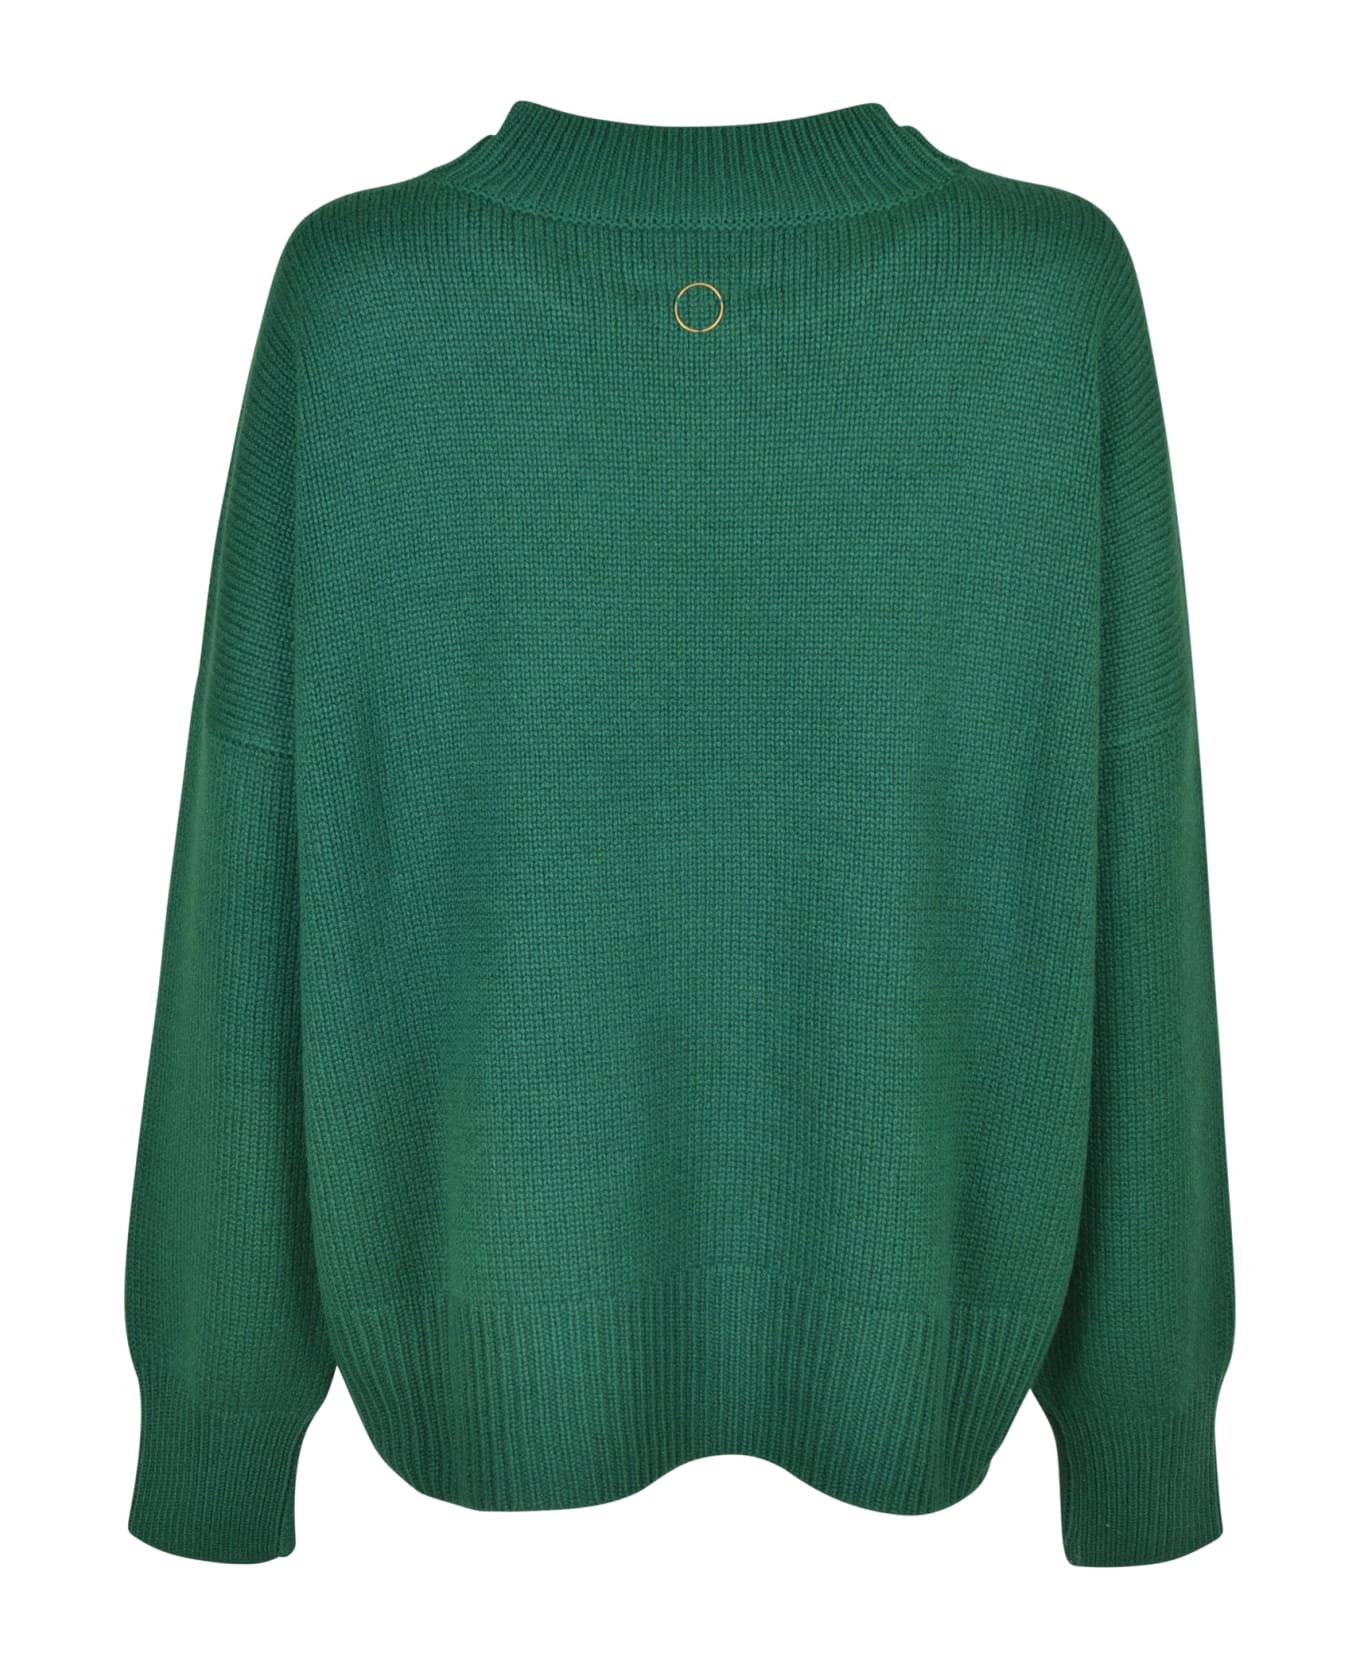 Oyuna Aila Sweater - Emerald ニットウェア